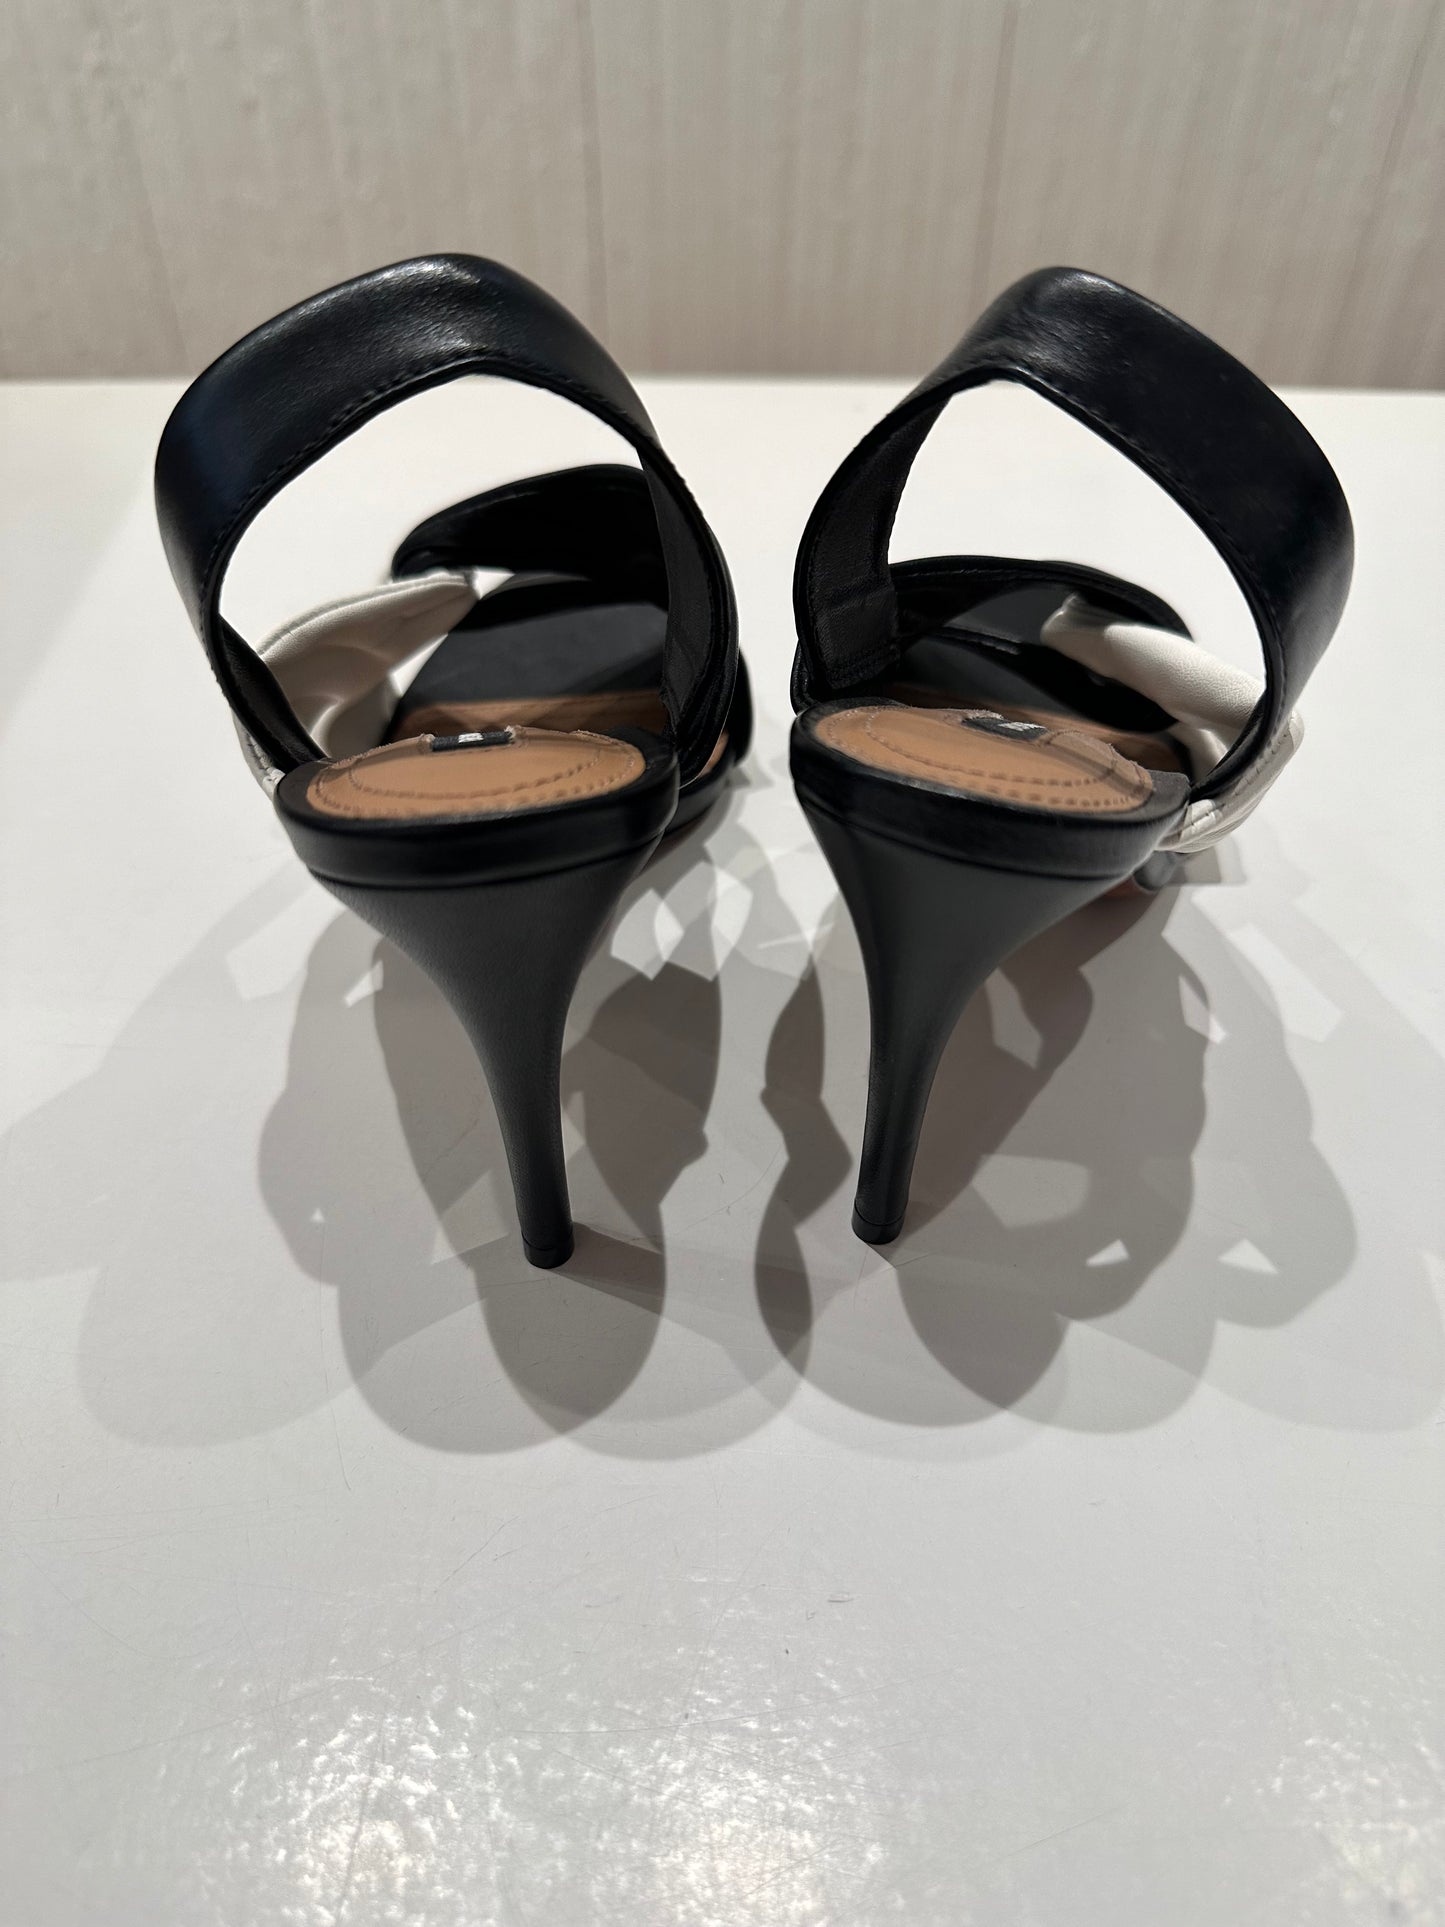 Talia soft nappa black and white heel